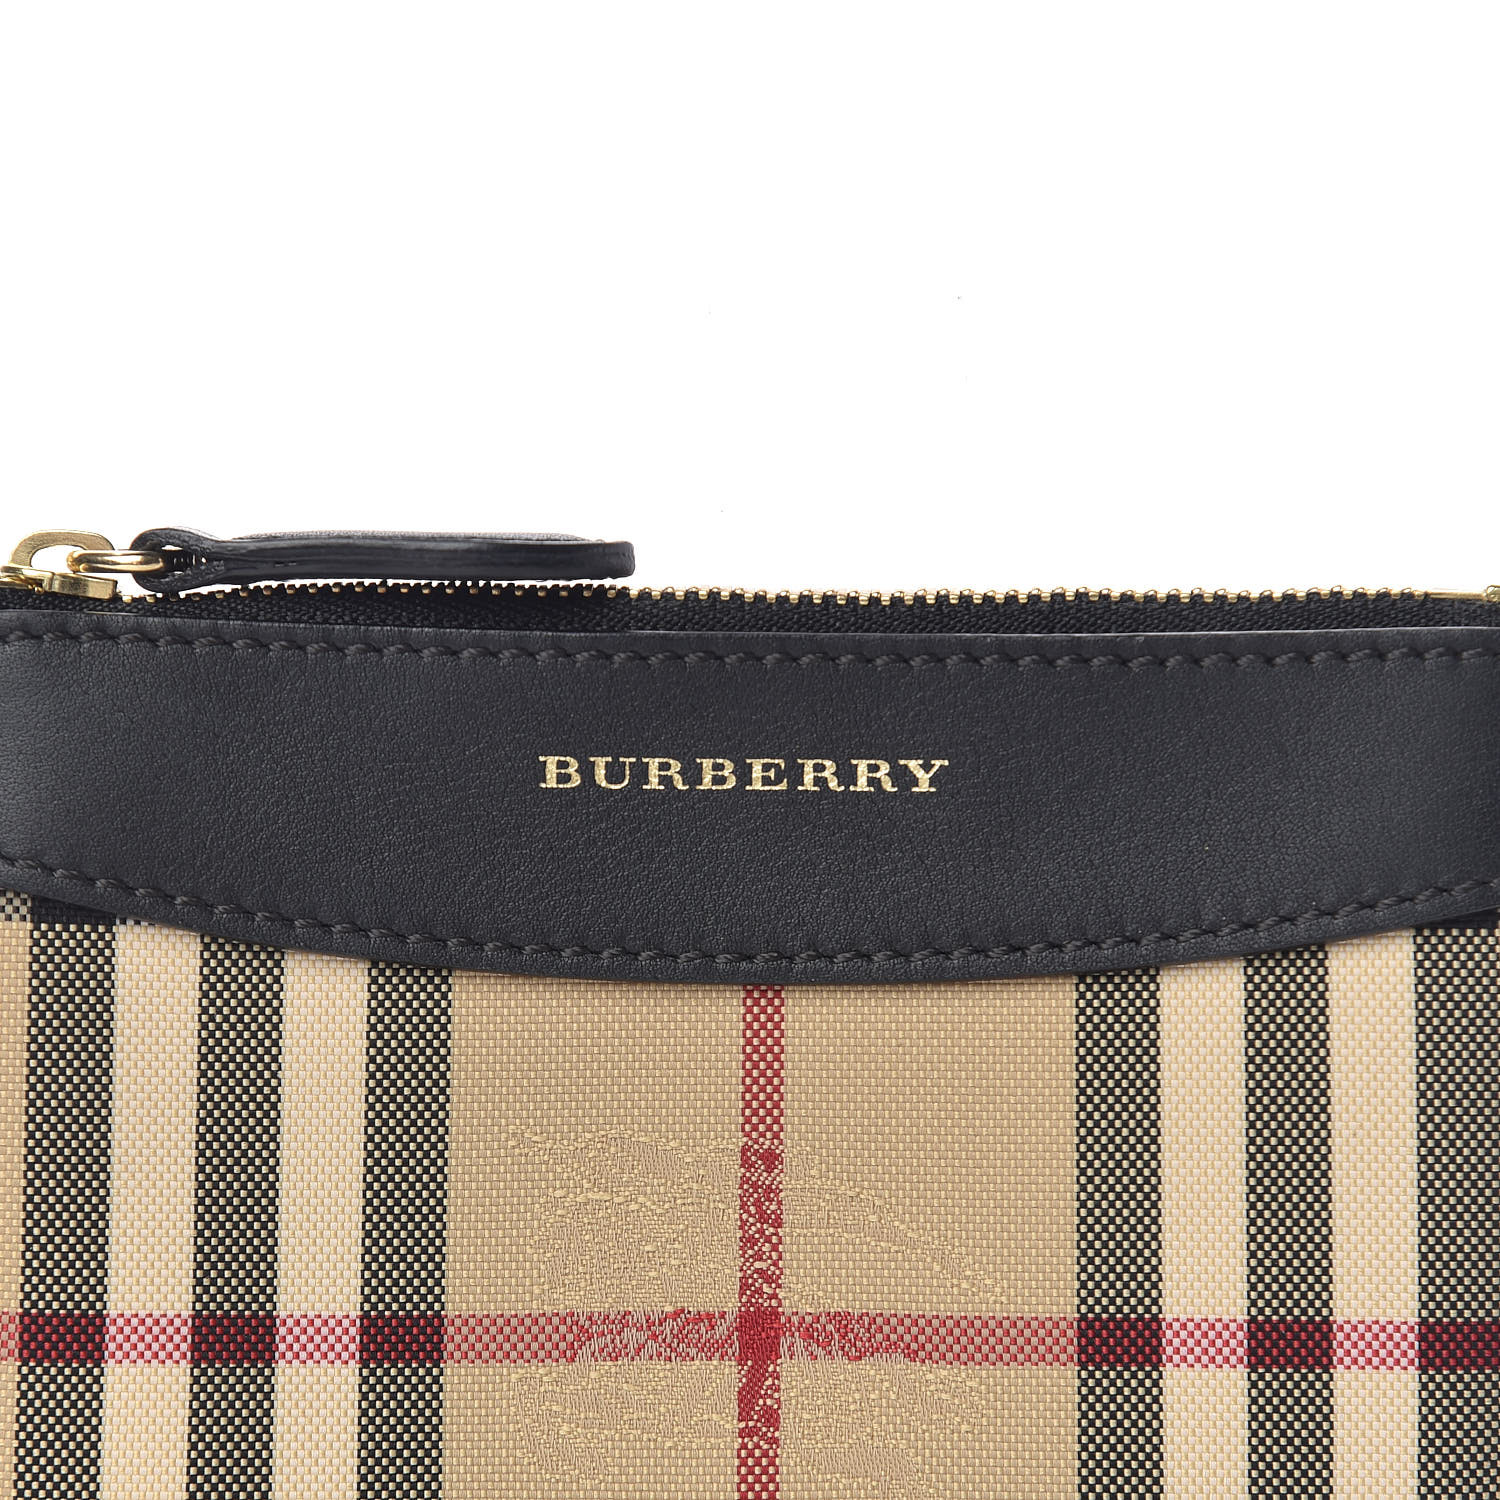 burberry zip pouch